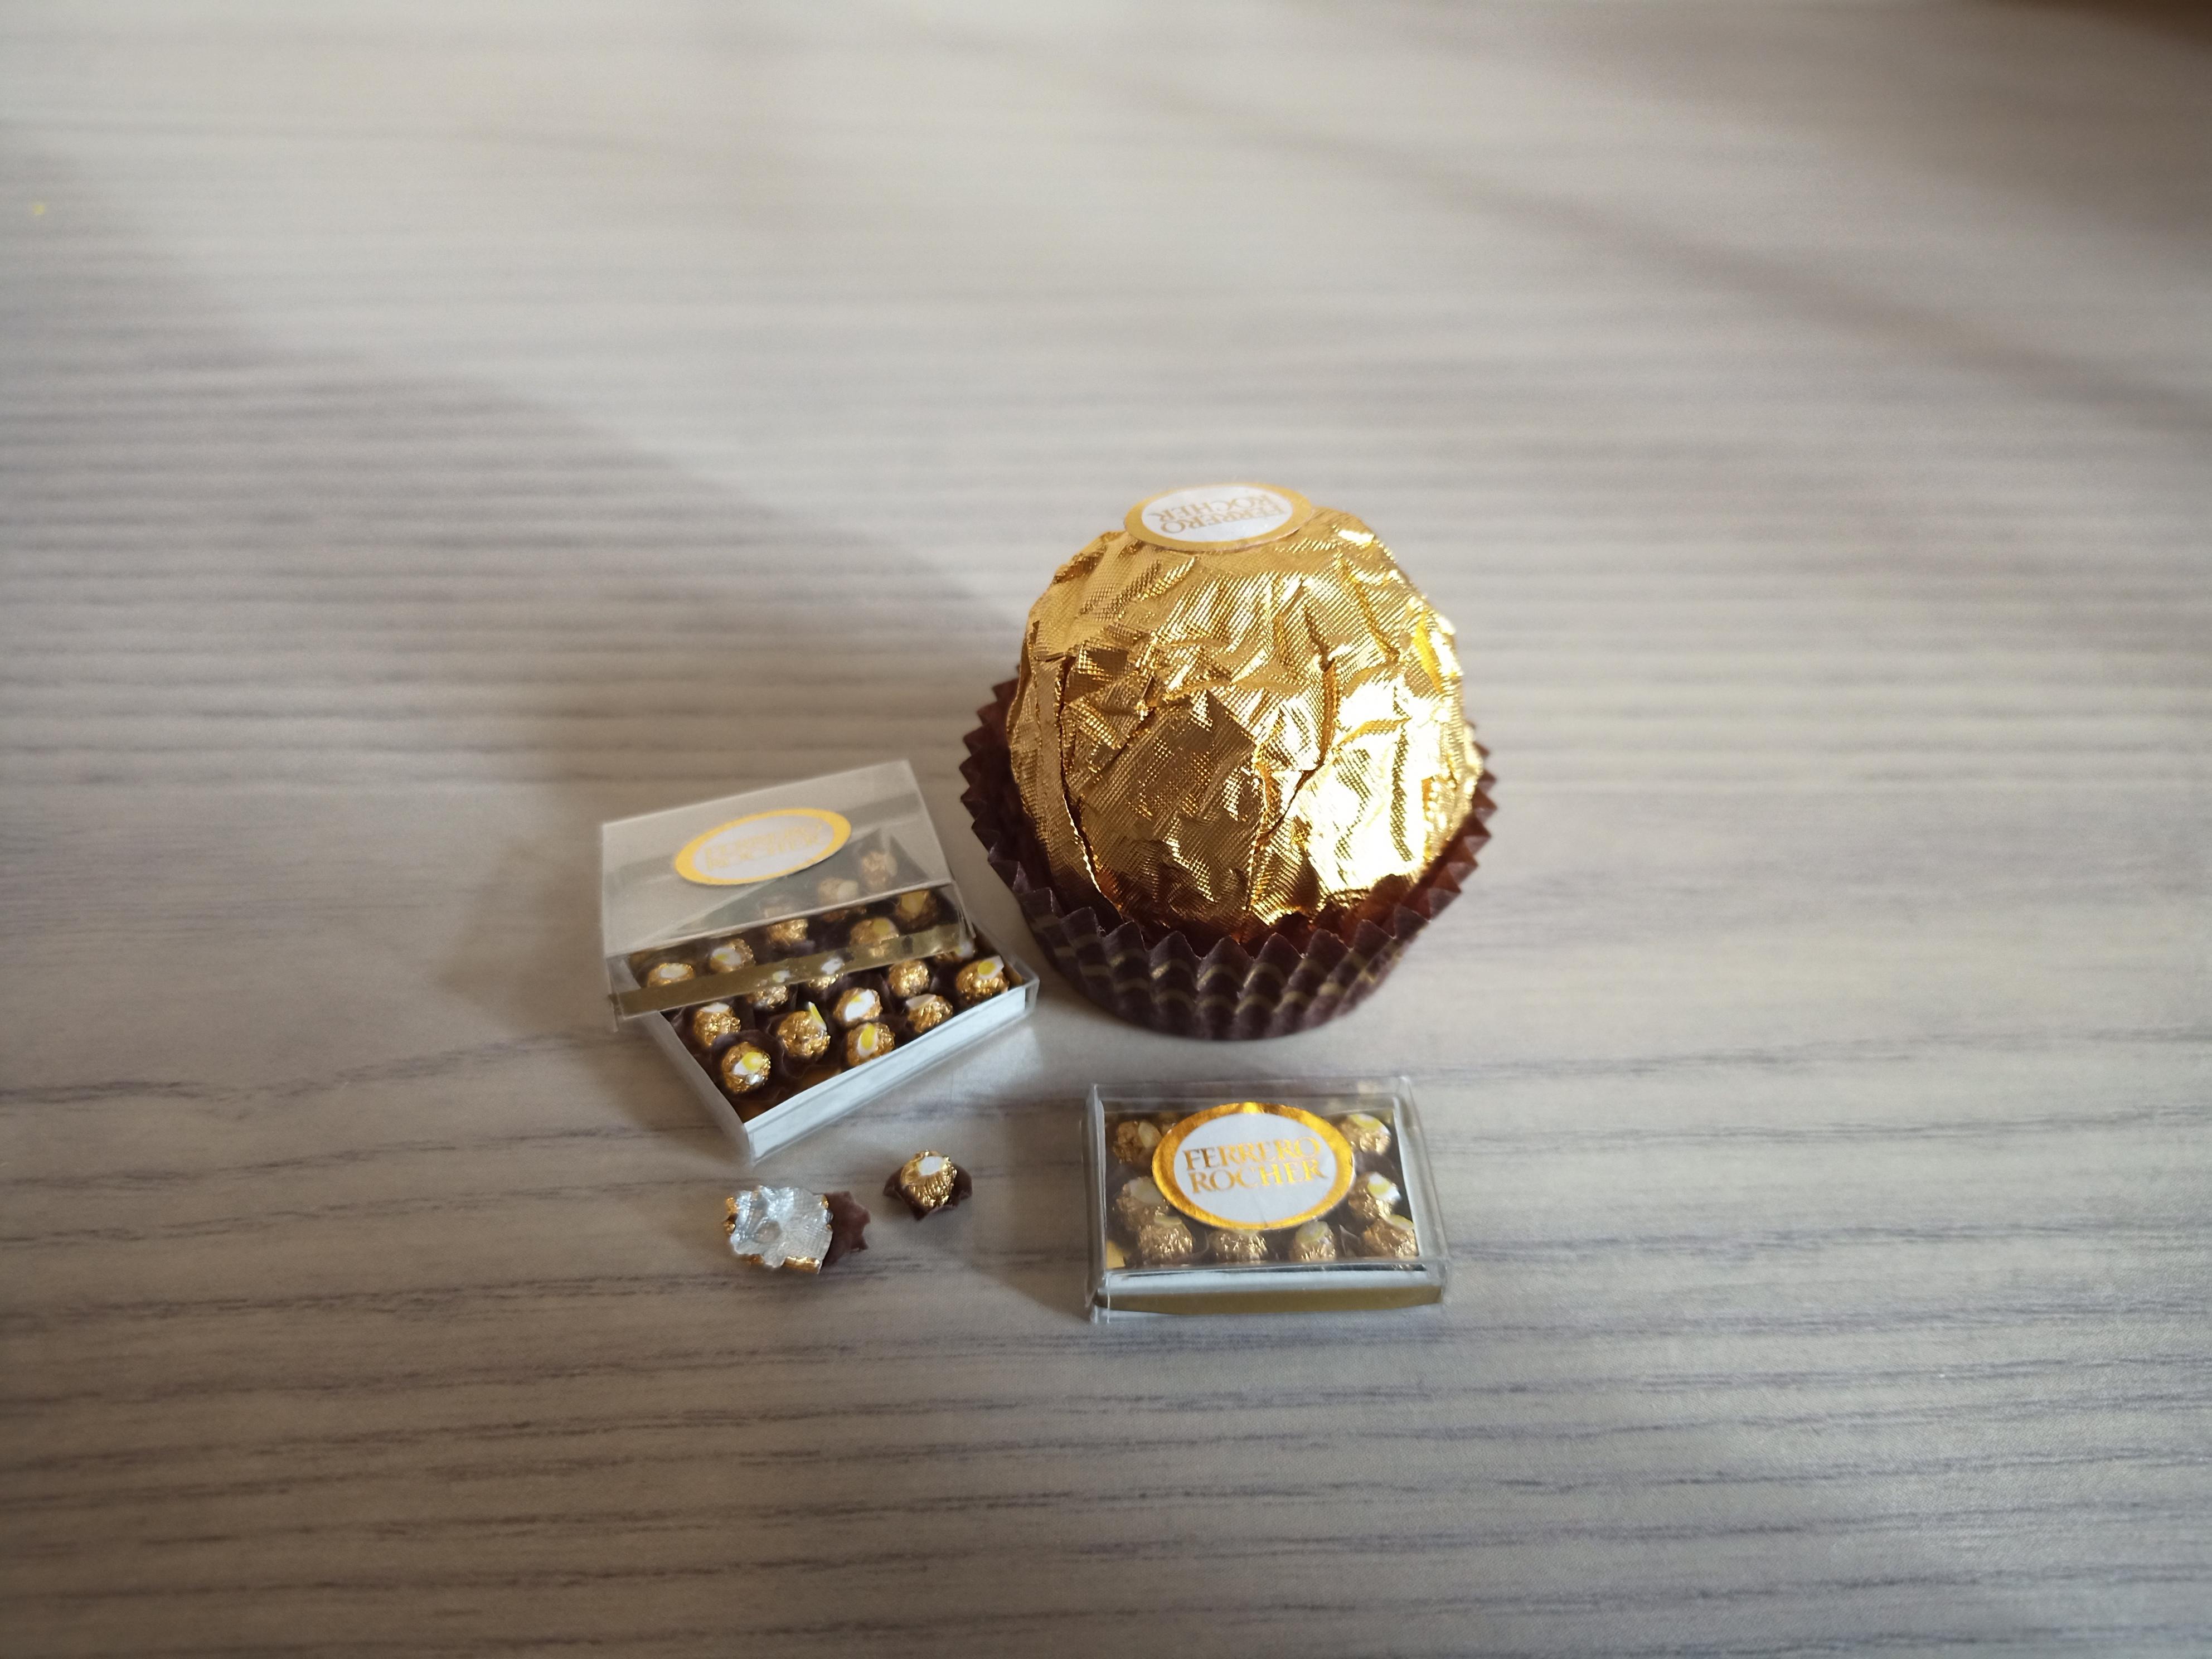 Best U Just_jia Image On Pholder. Mini Ferrero Rocher :)